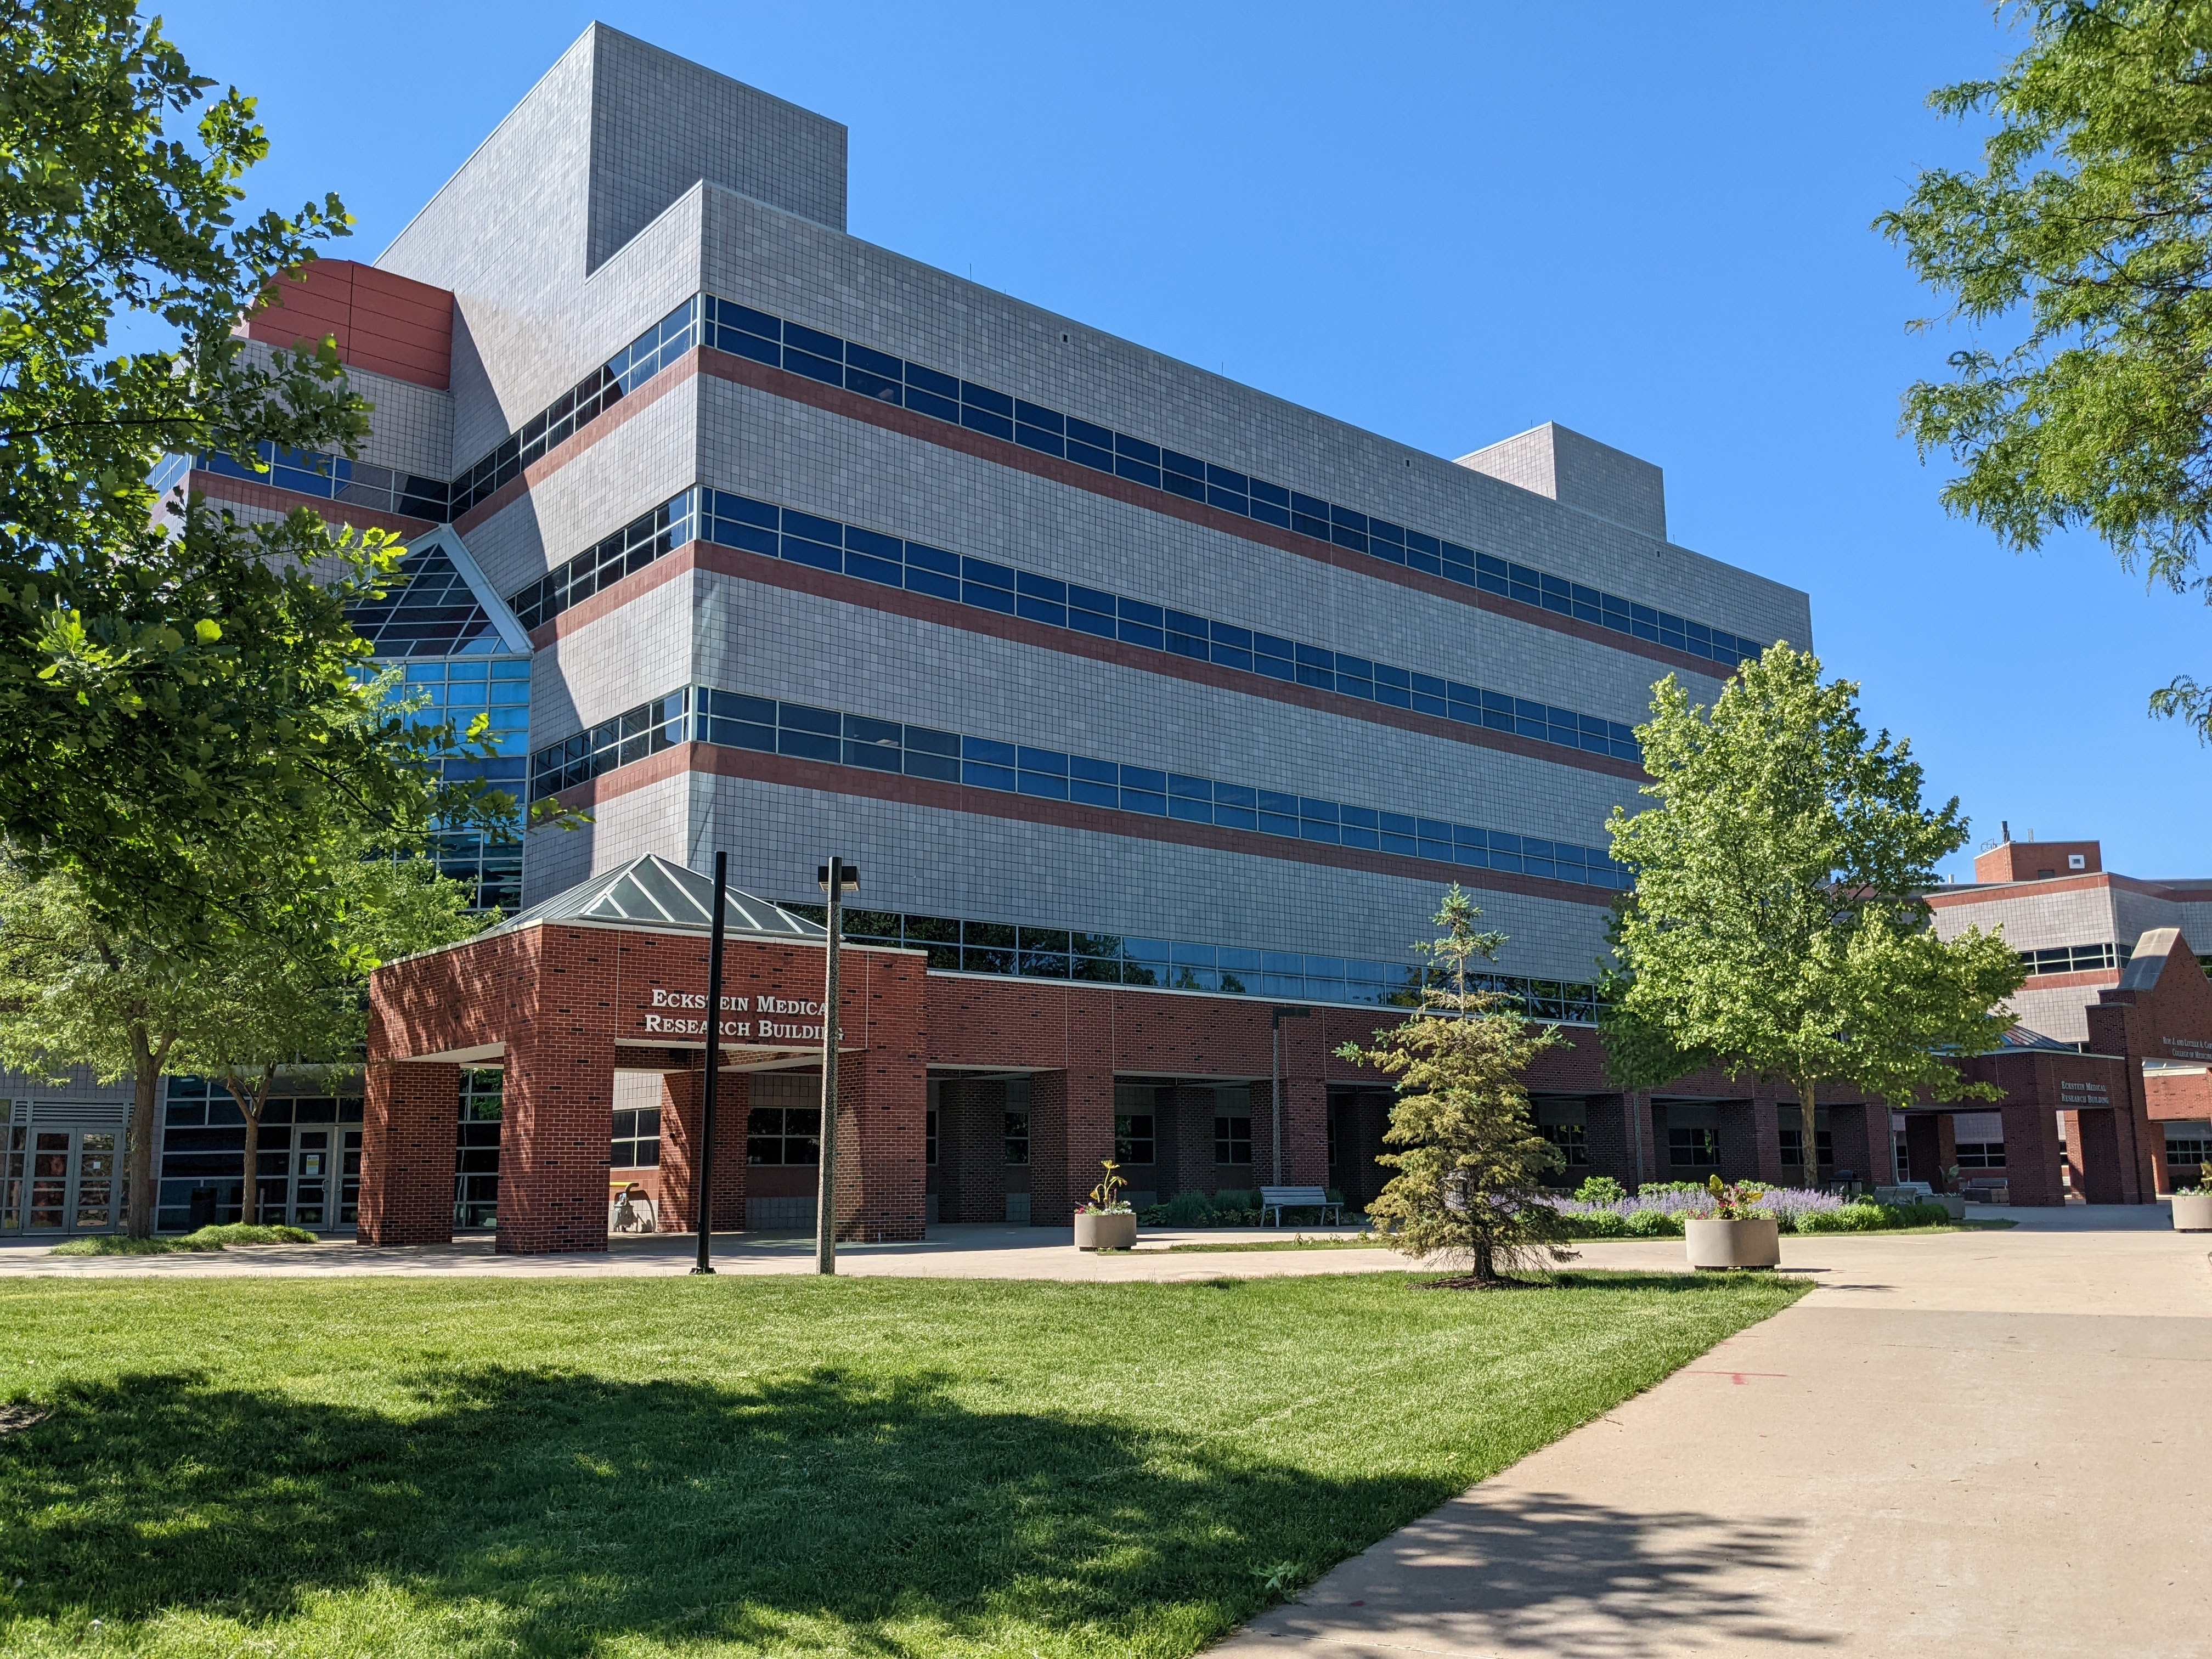 John W. Eckstein Medical Research Building